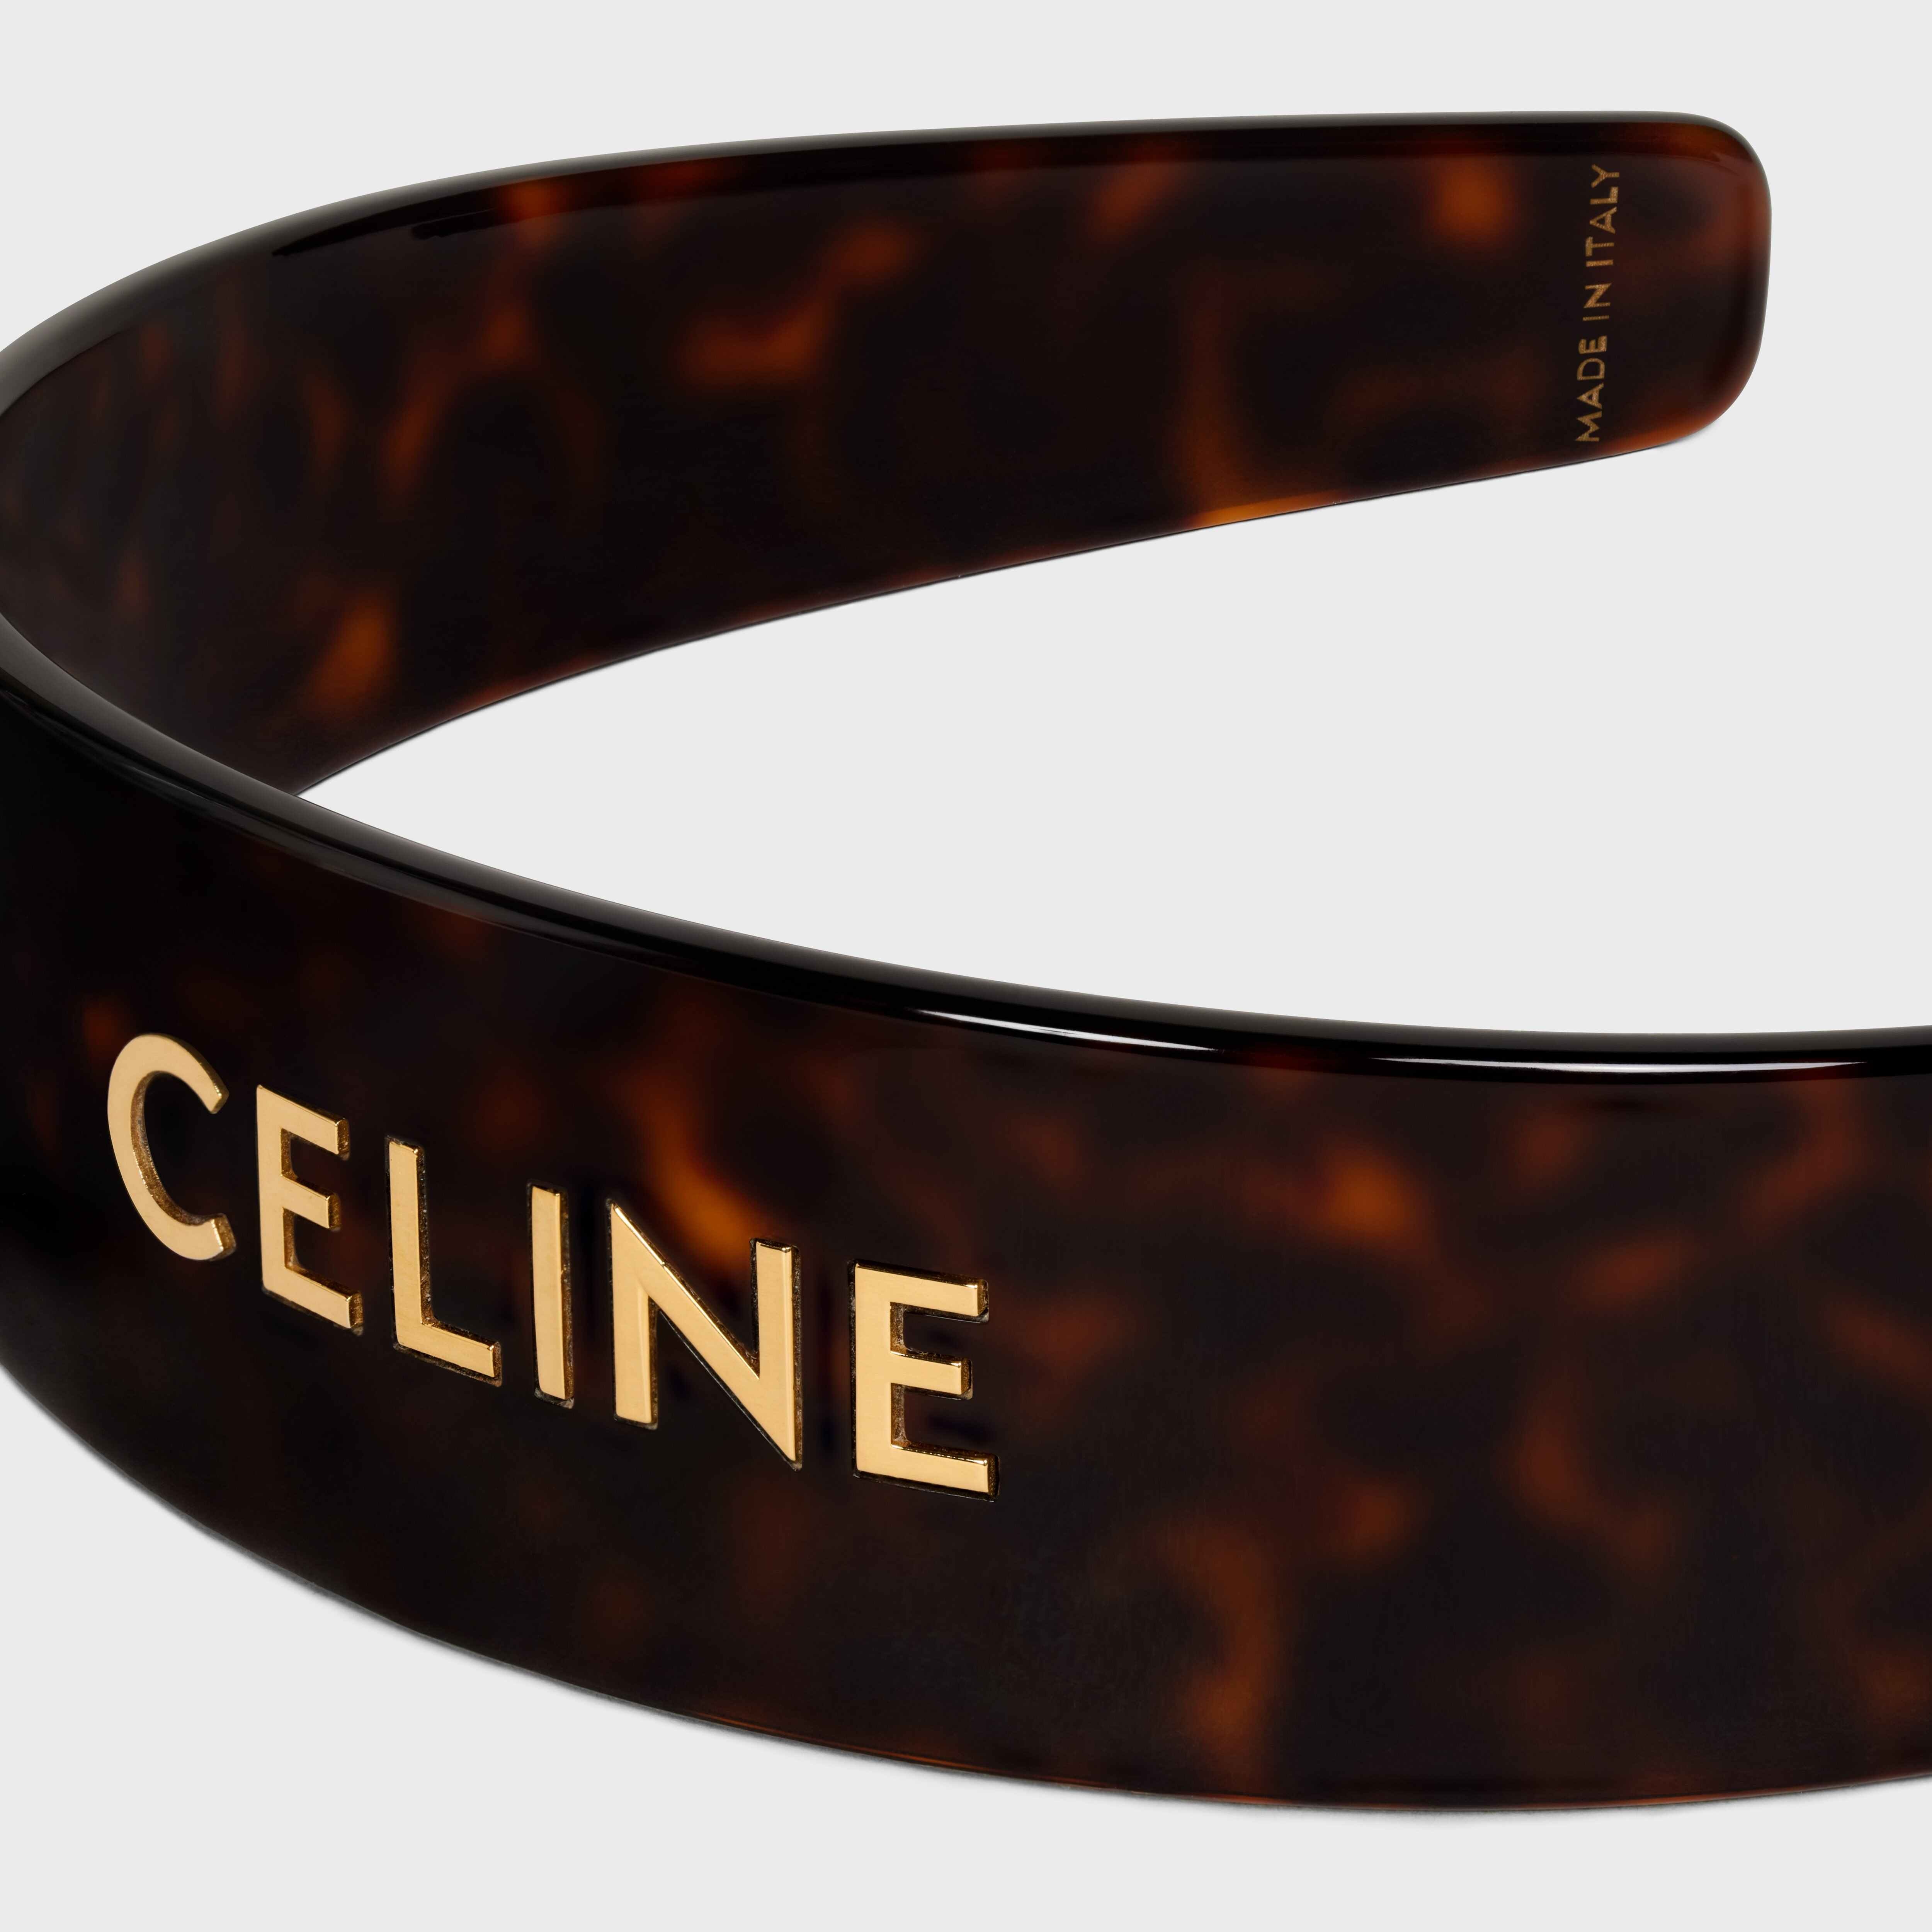 Celine Headband in Dark Havana Acetate and Brass with Gold finish - 3